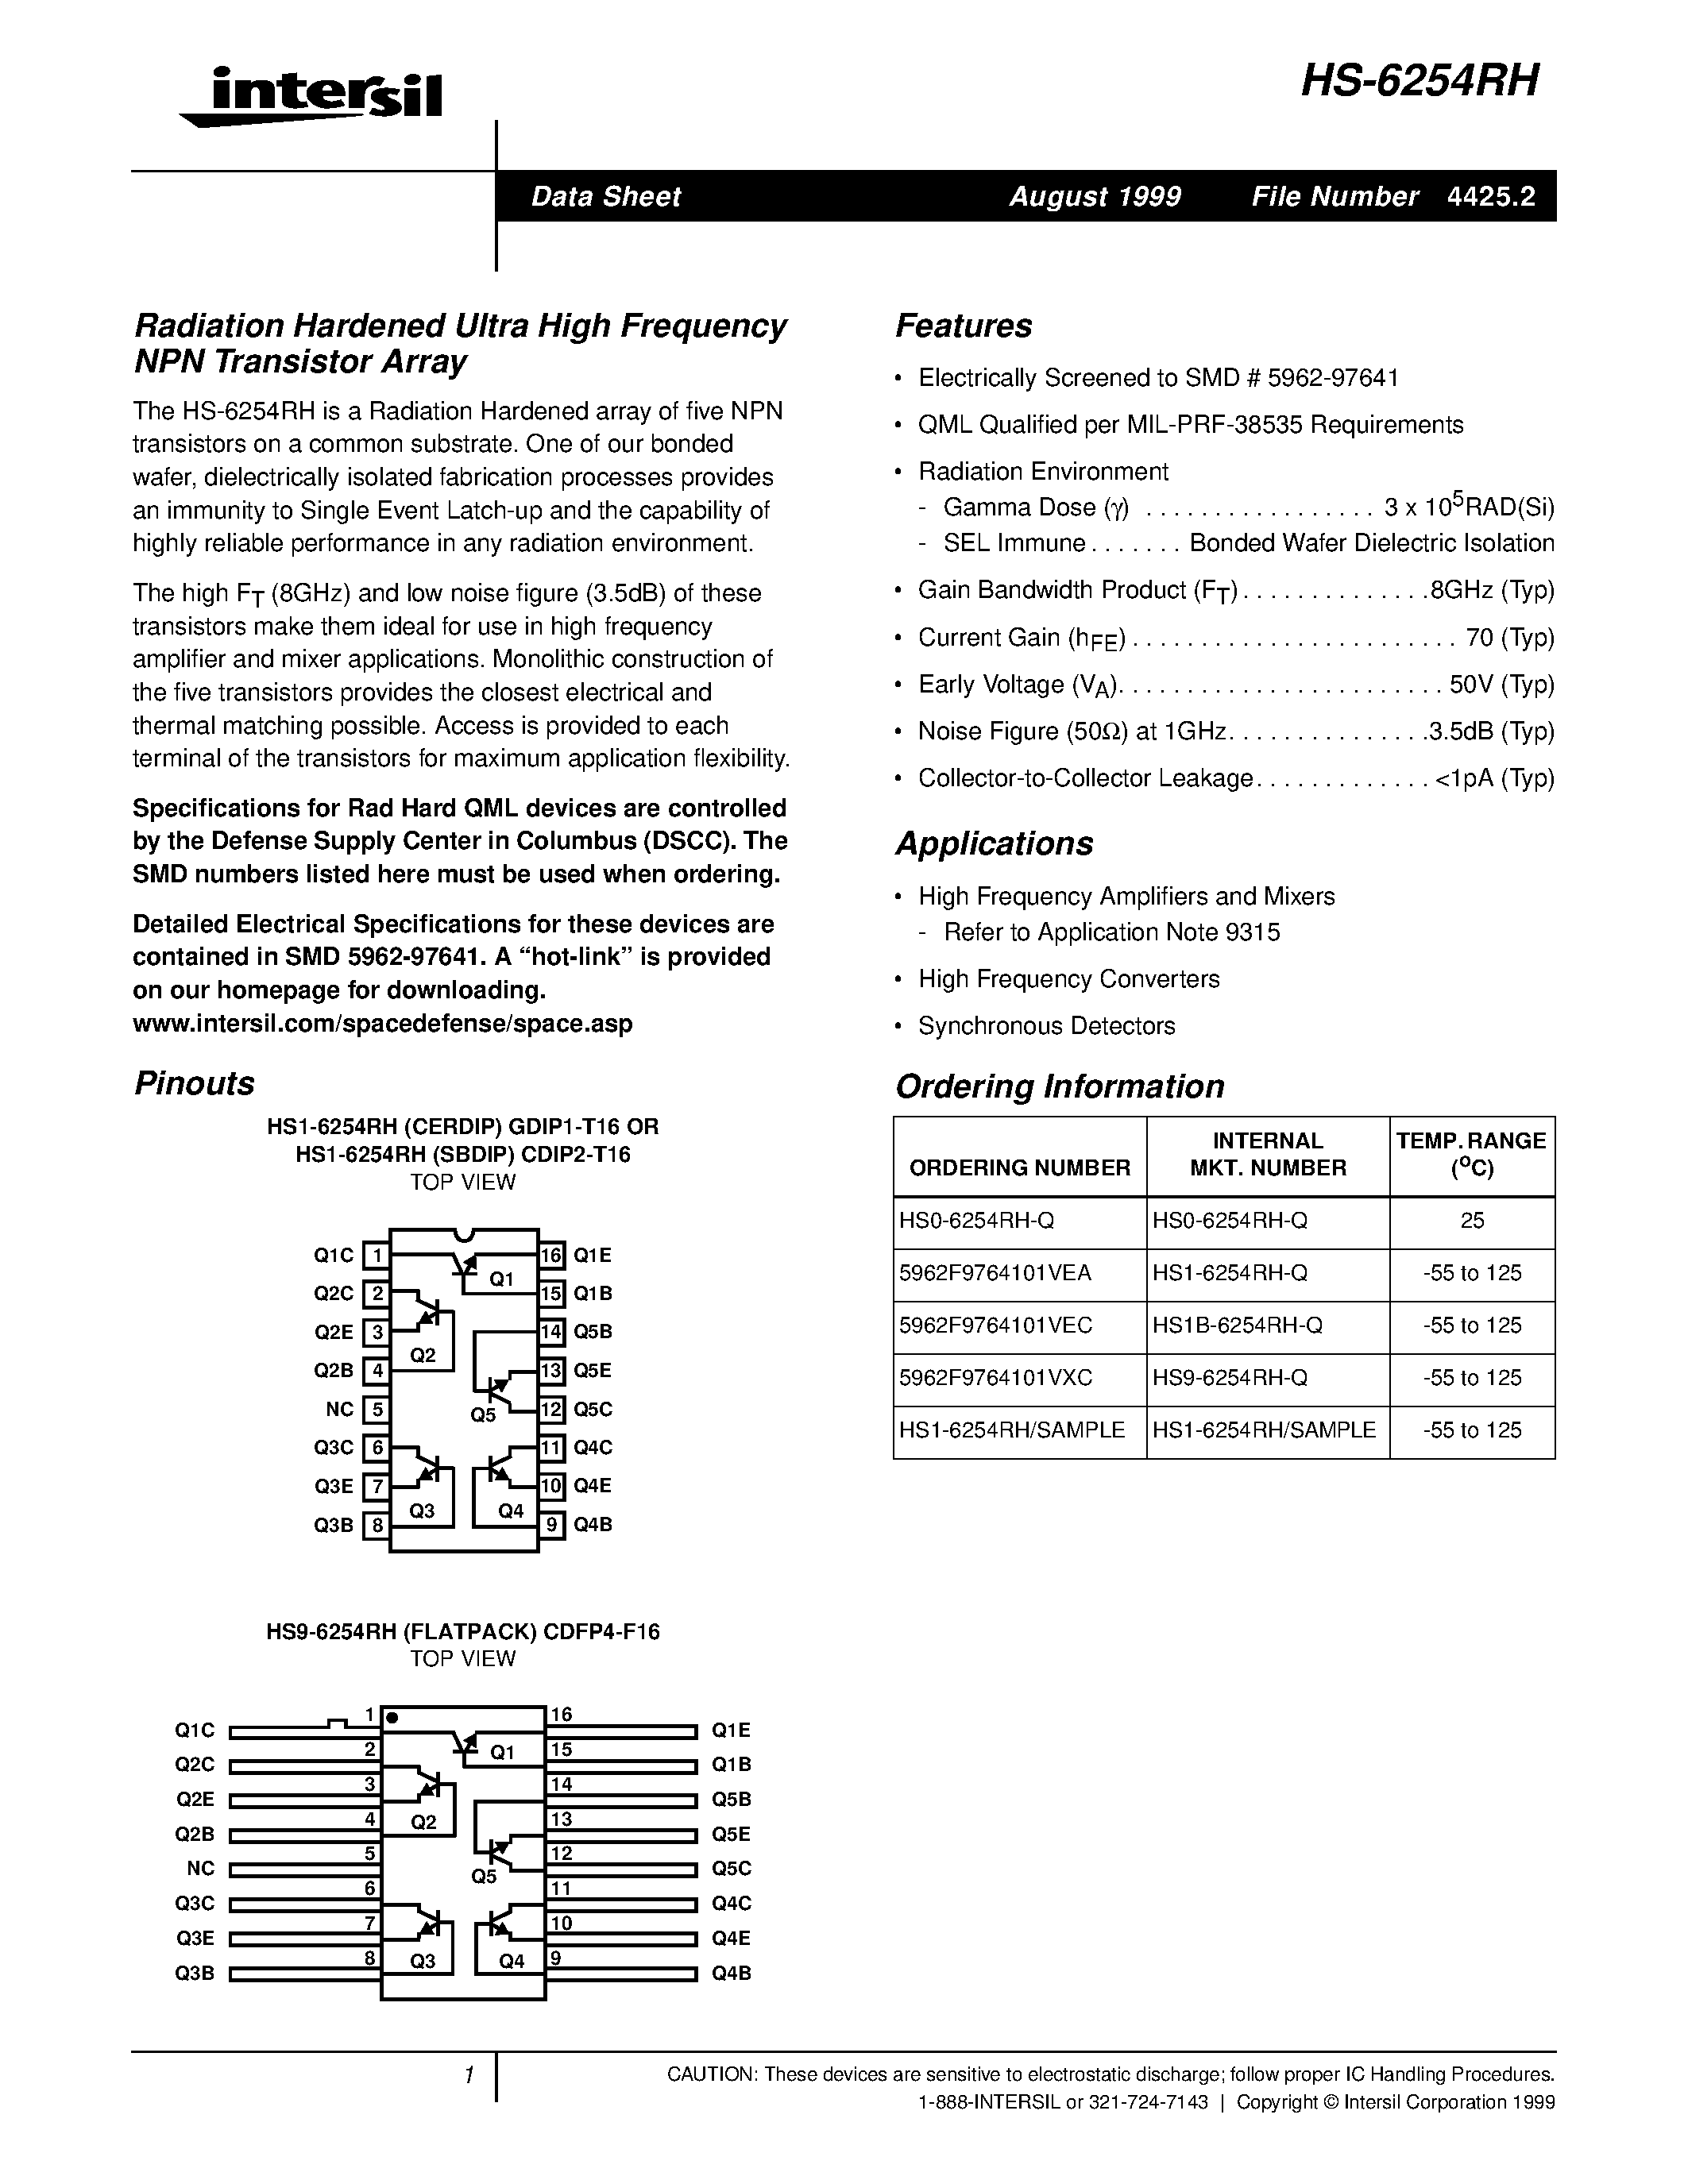 Datasheet HS1B-6254RH-Q - Radiation Hardened Ultra High Frequency NPN Transistor Array page 1